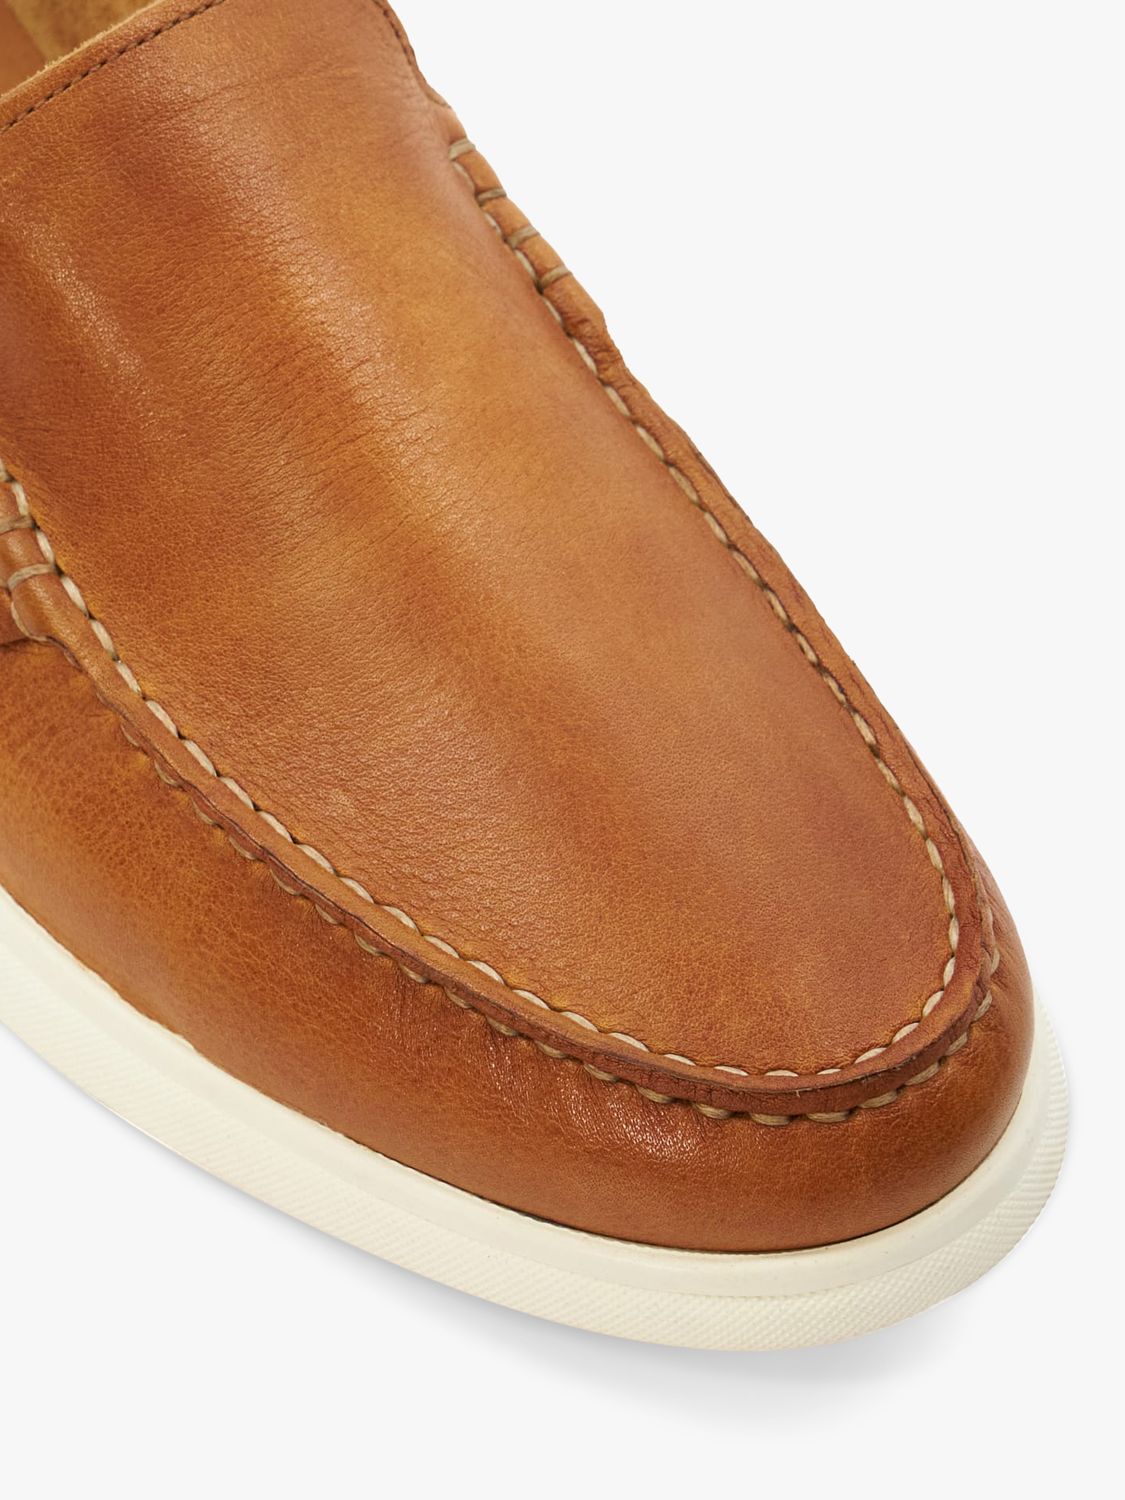 Dune Buftonn Leather Loafers, Tan, 7